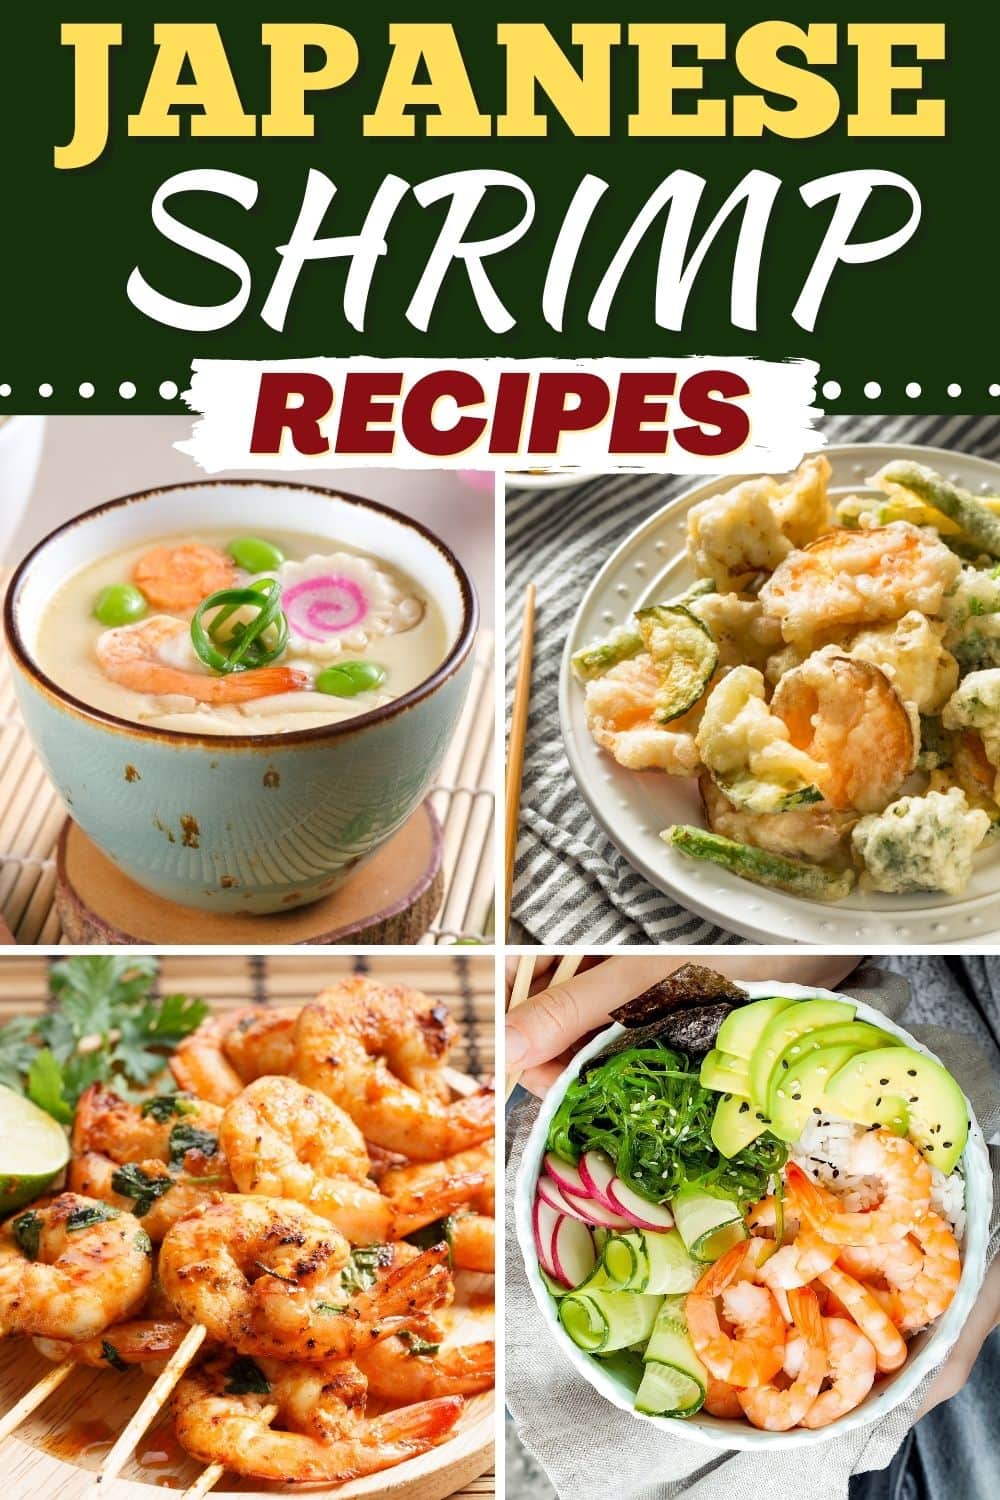 10 Authentic Japanese Shrimp Recipes - Insanely Good